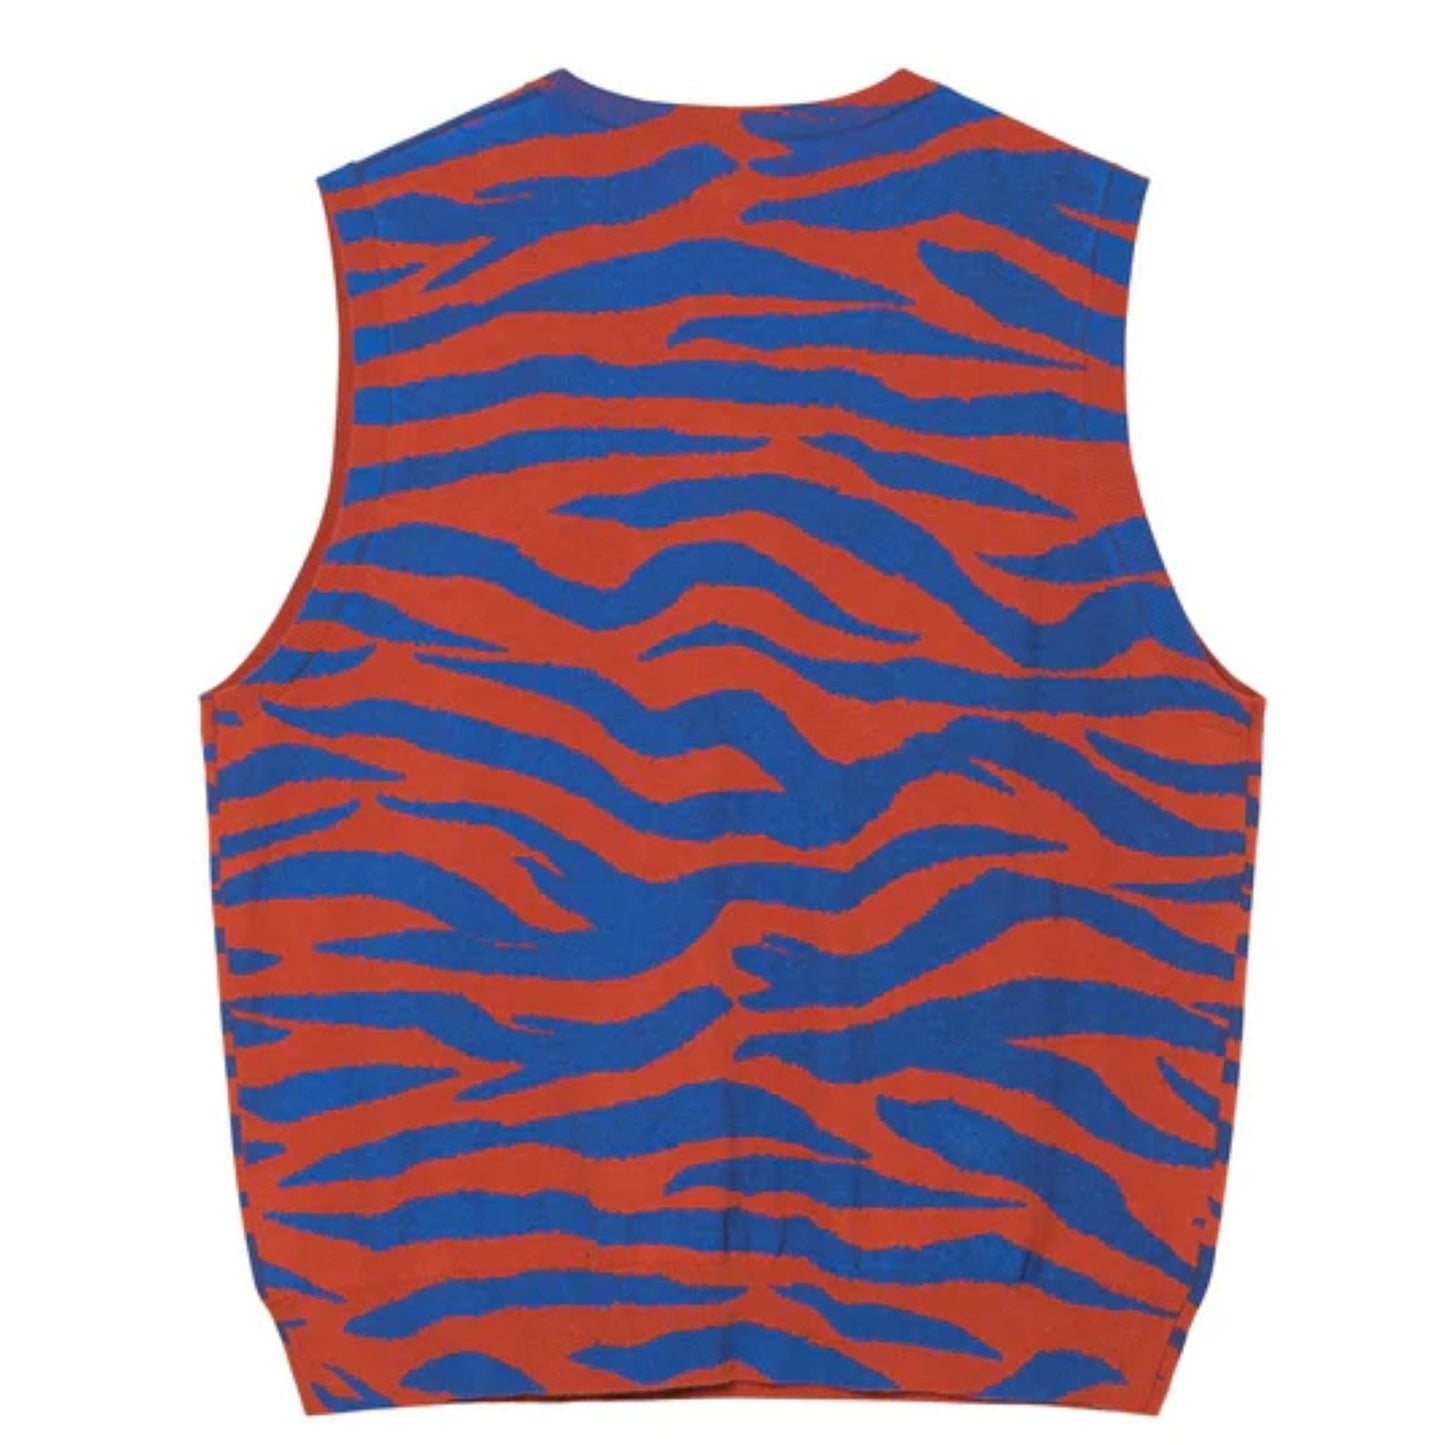 STUSSY - Tiger Printed Sweater Vest